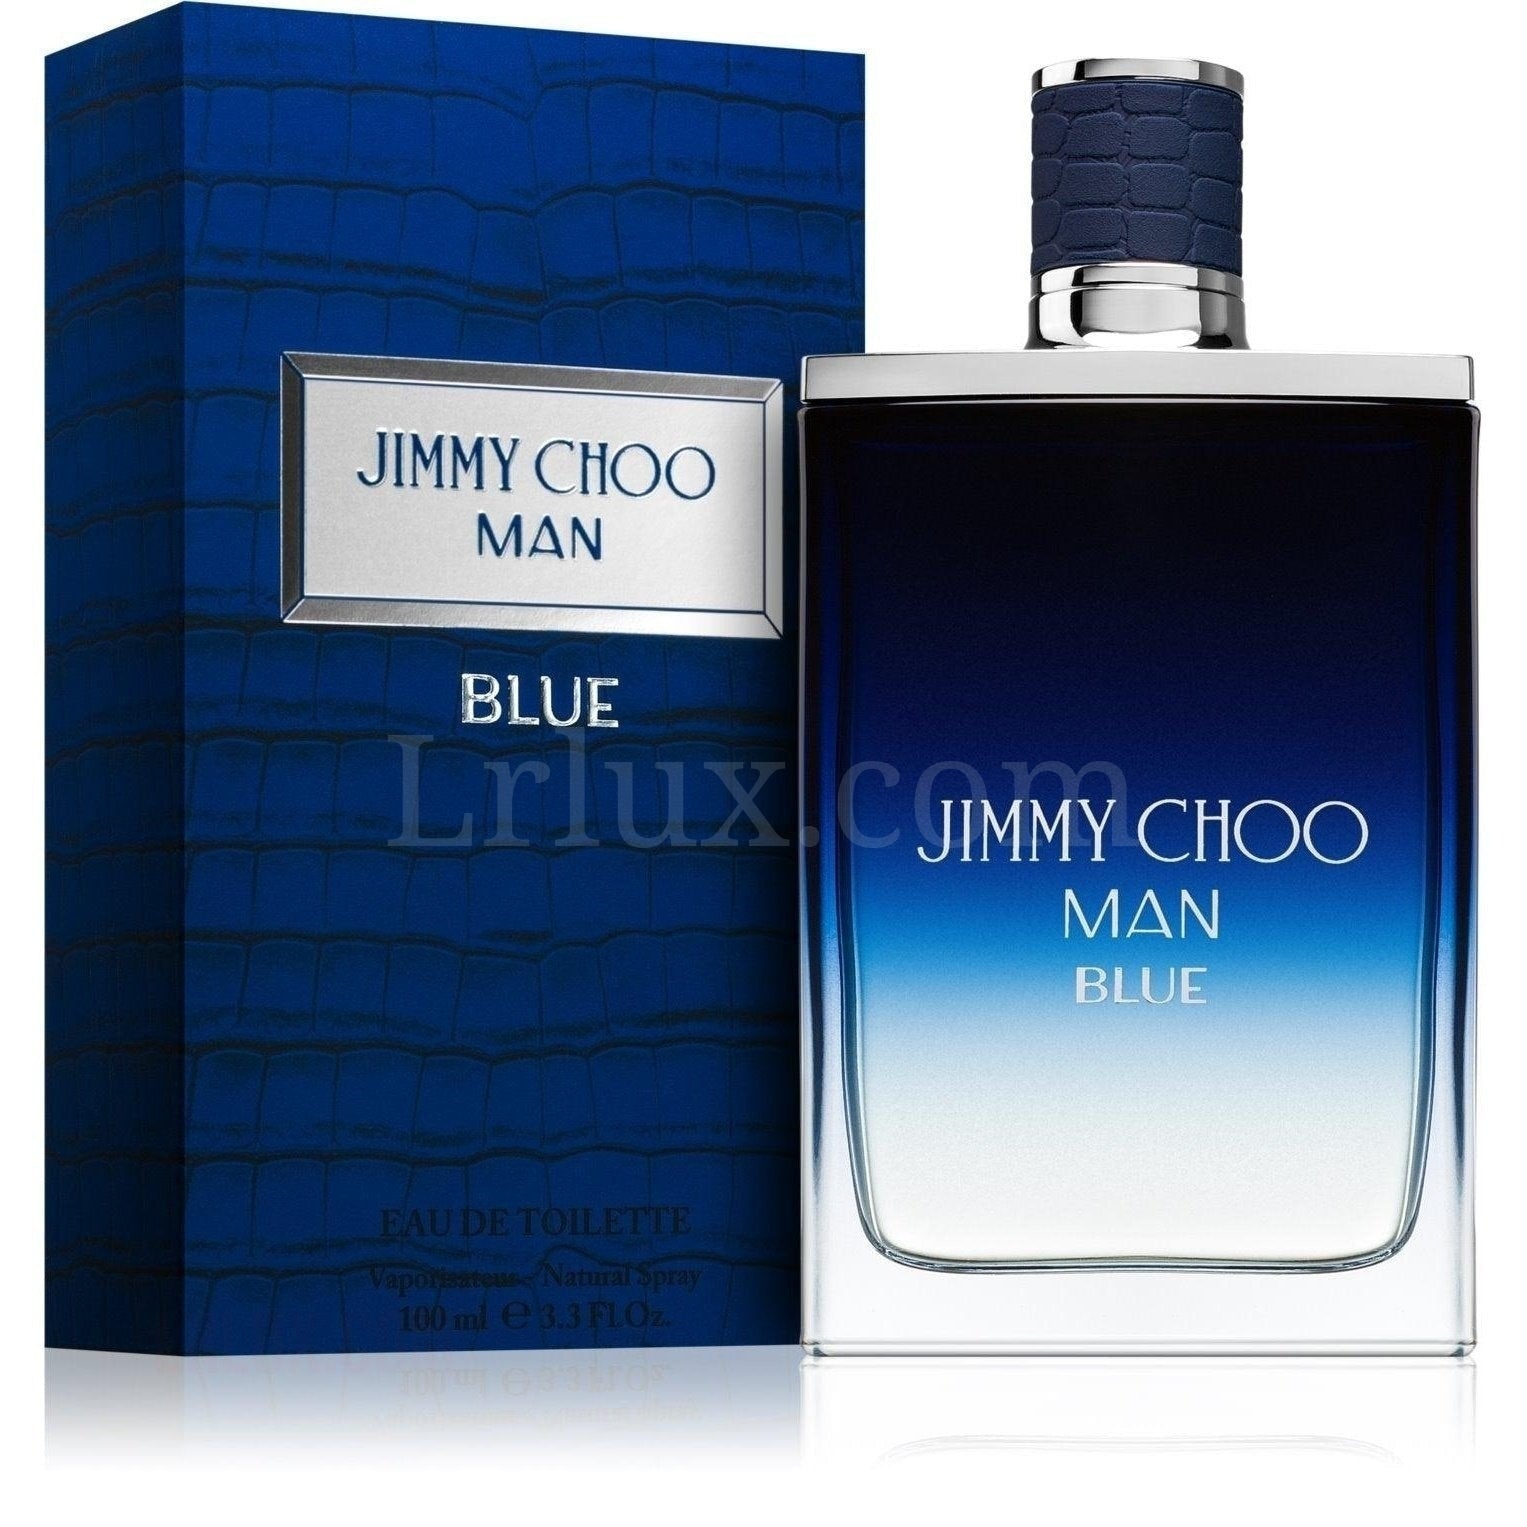 Jimmy Choo Man Blue - Lrlux.com